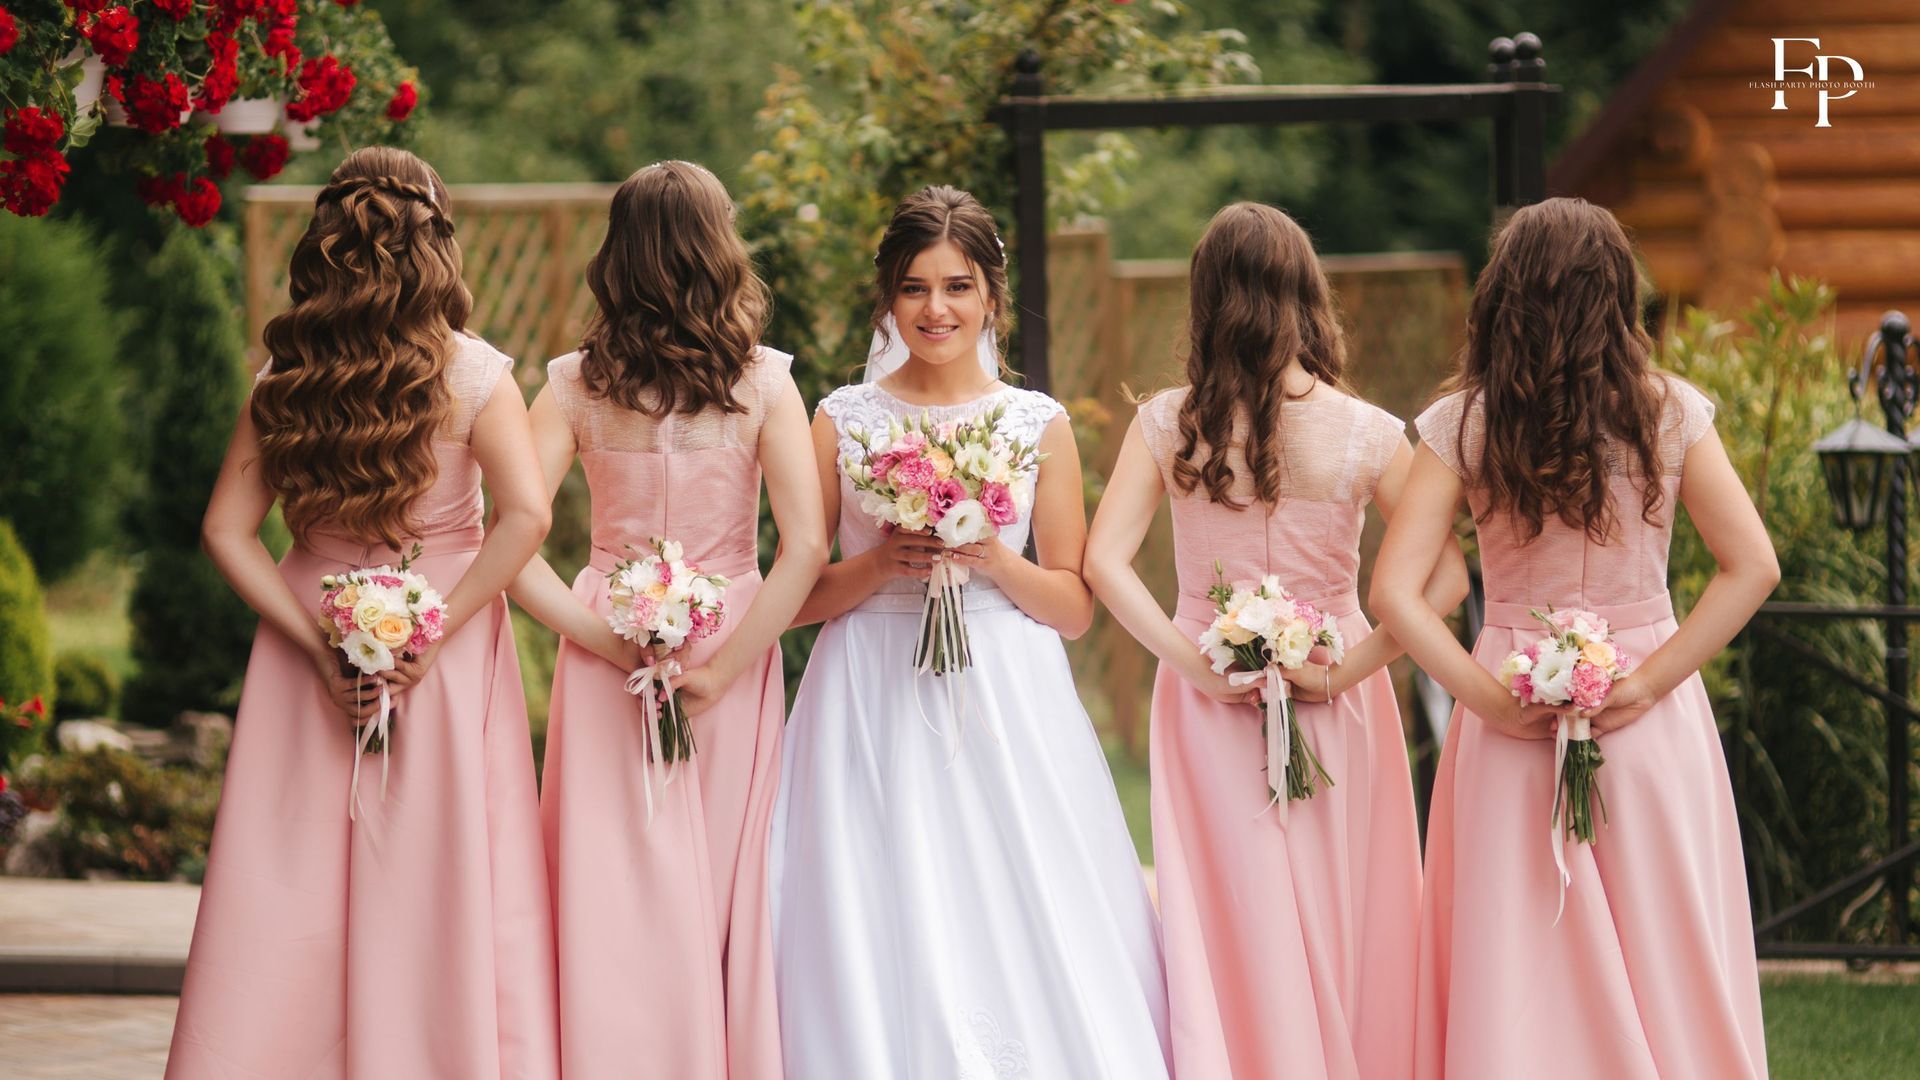 Bride and bridesmaids strike a pose, celebrating friendship at her South Austin destination wedding.